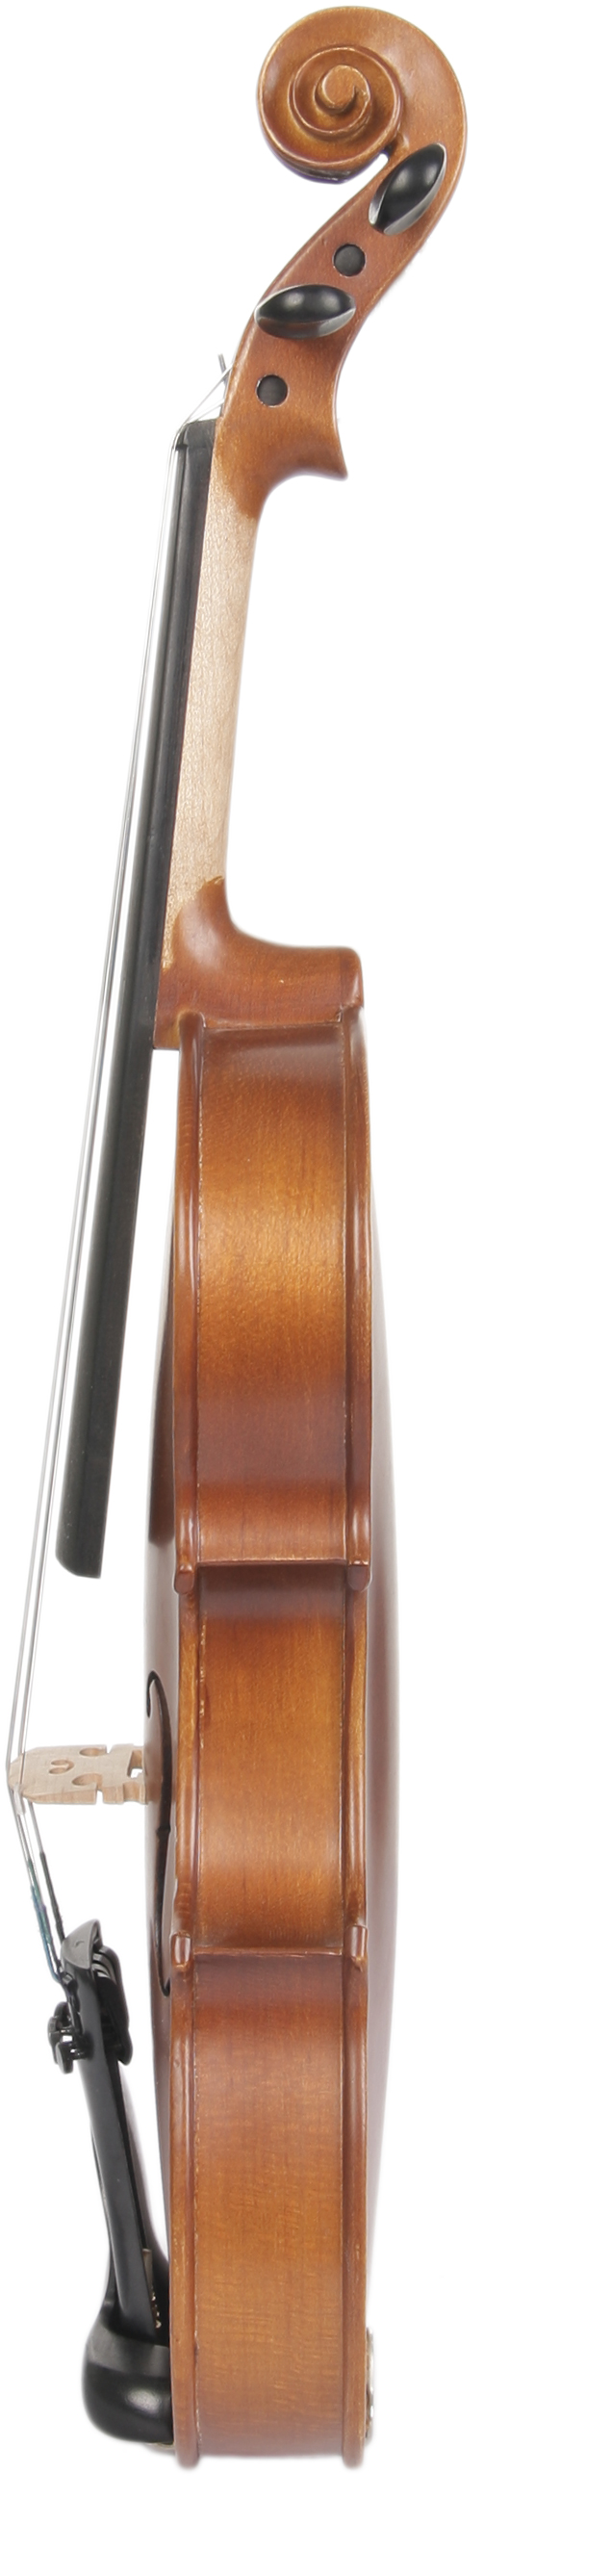 Violingarnitur Mod. 300 1/4